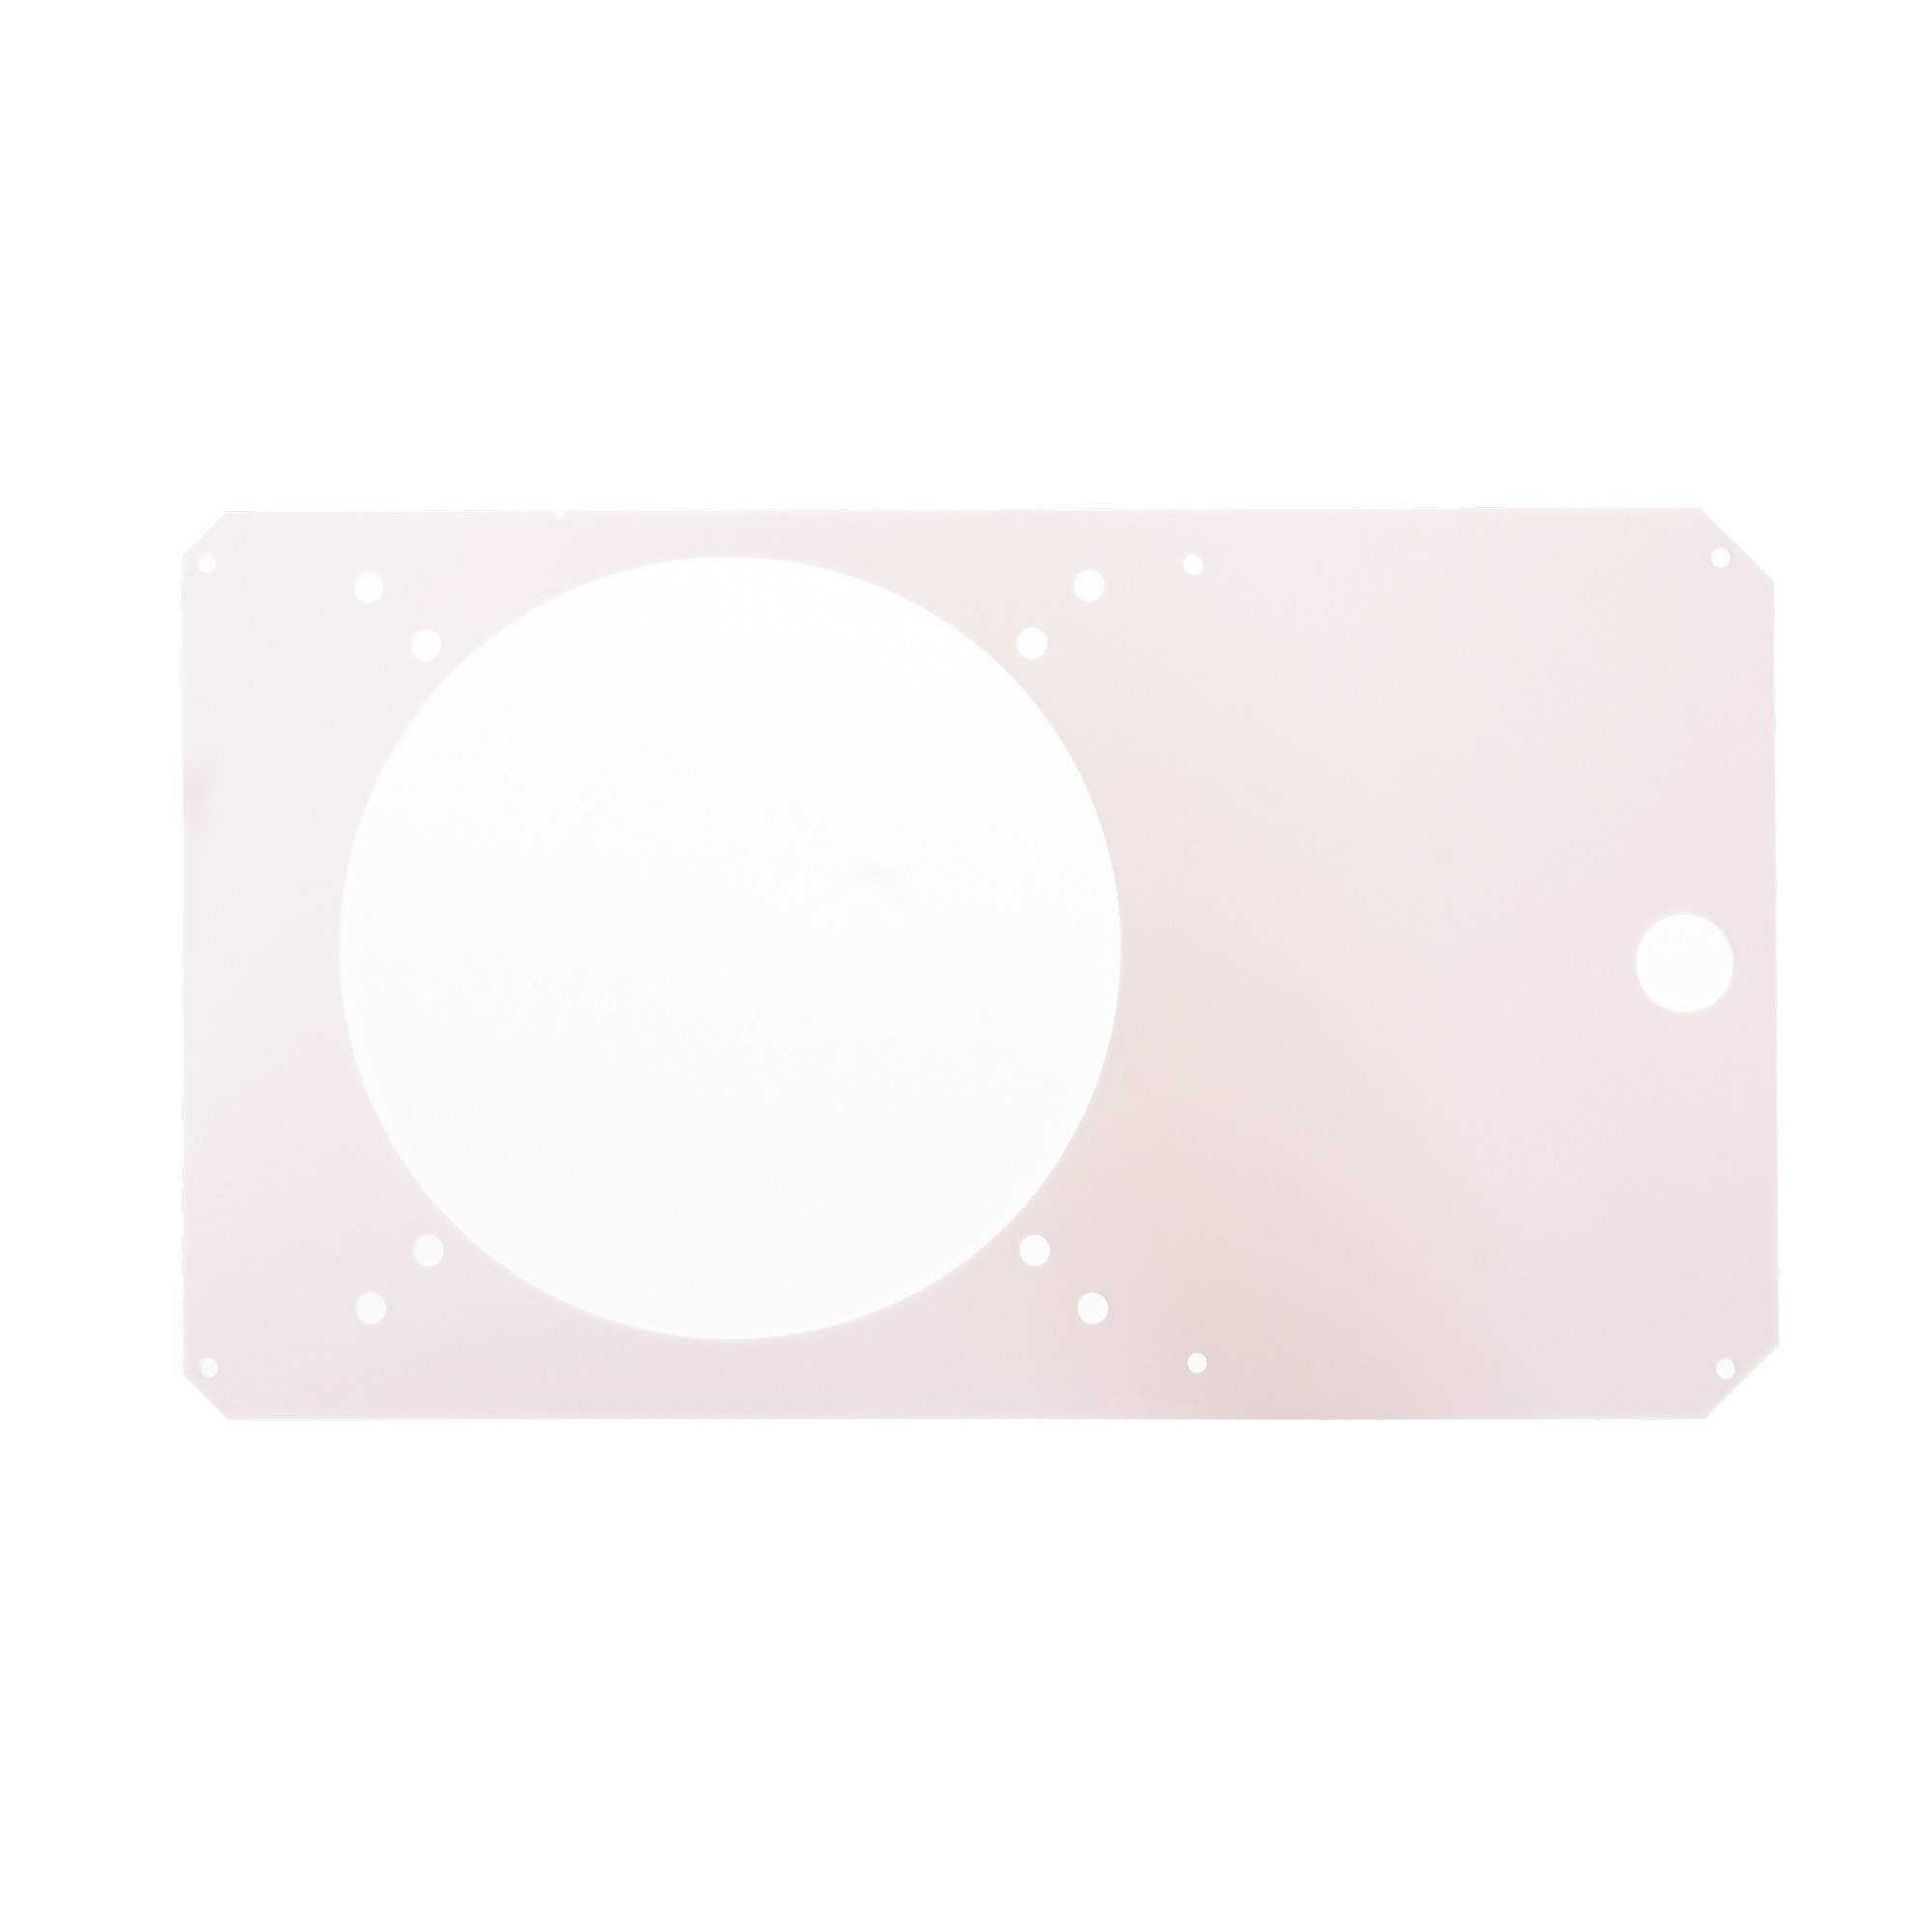 Lazer3D LZ7 XTD Right Panel (16mm Vandal) - Moonlight White Open